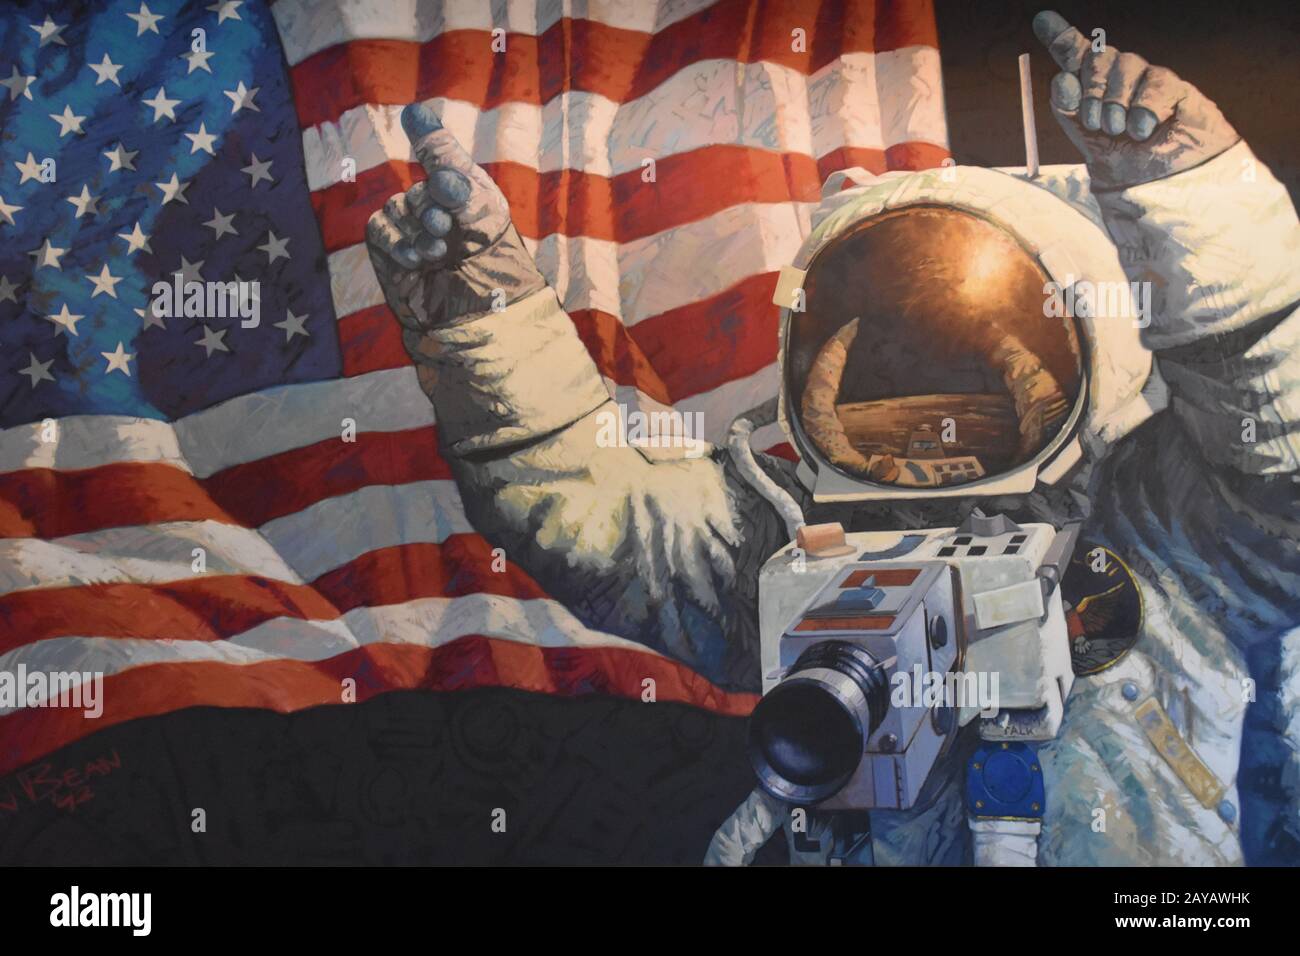 Astronaut im Space Center in Houston, Texas Stockfoto